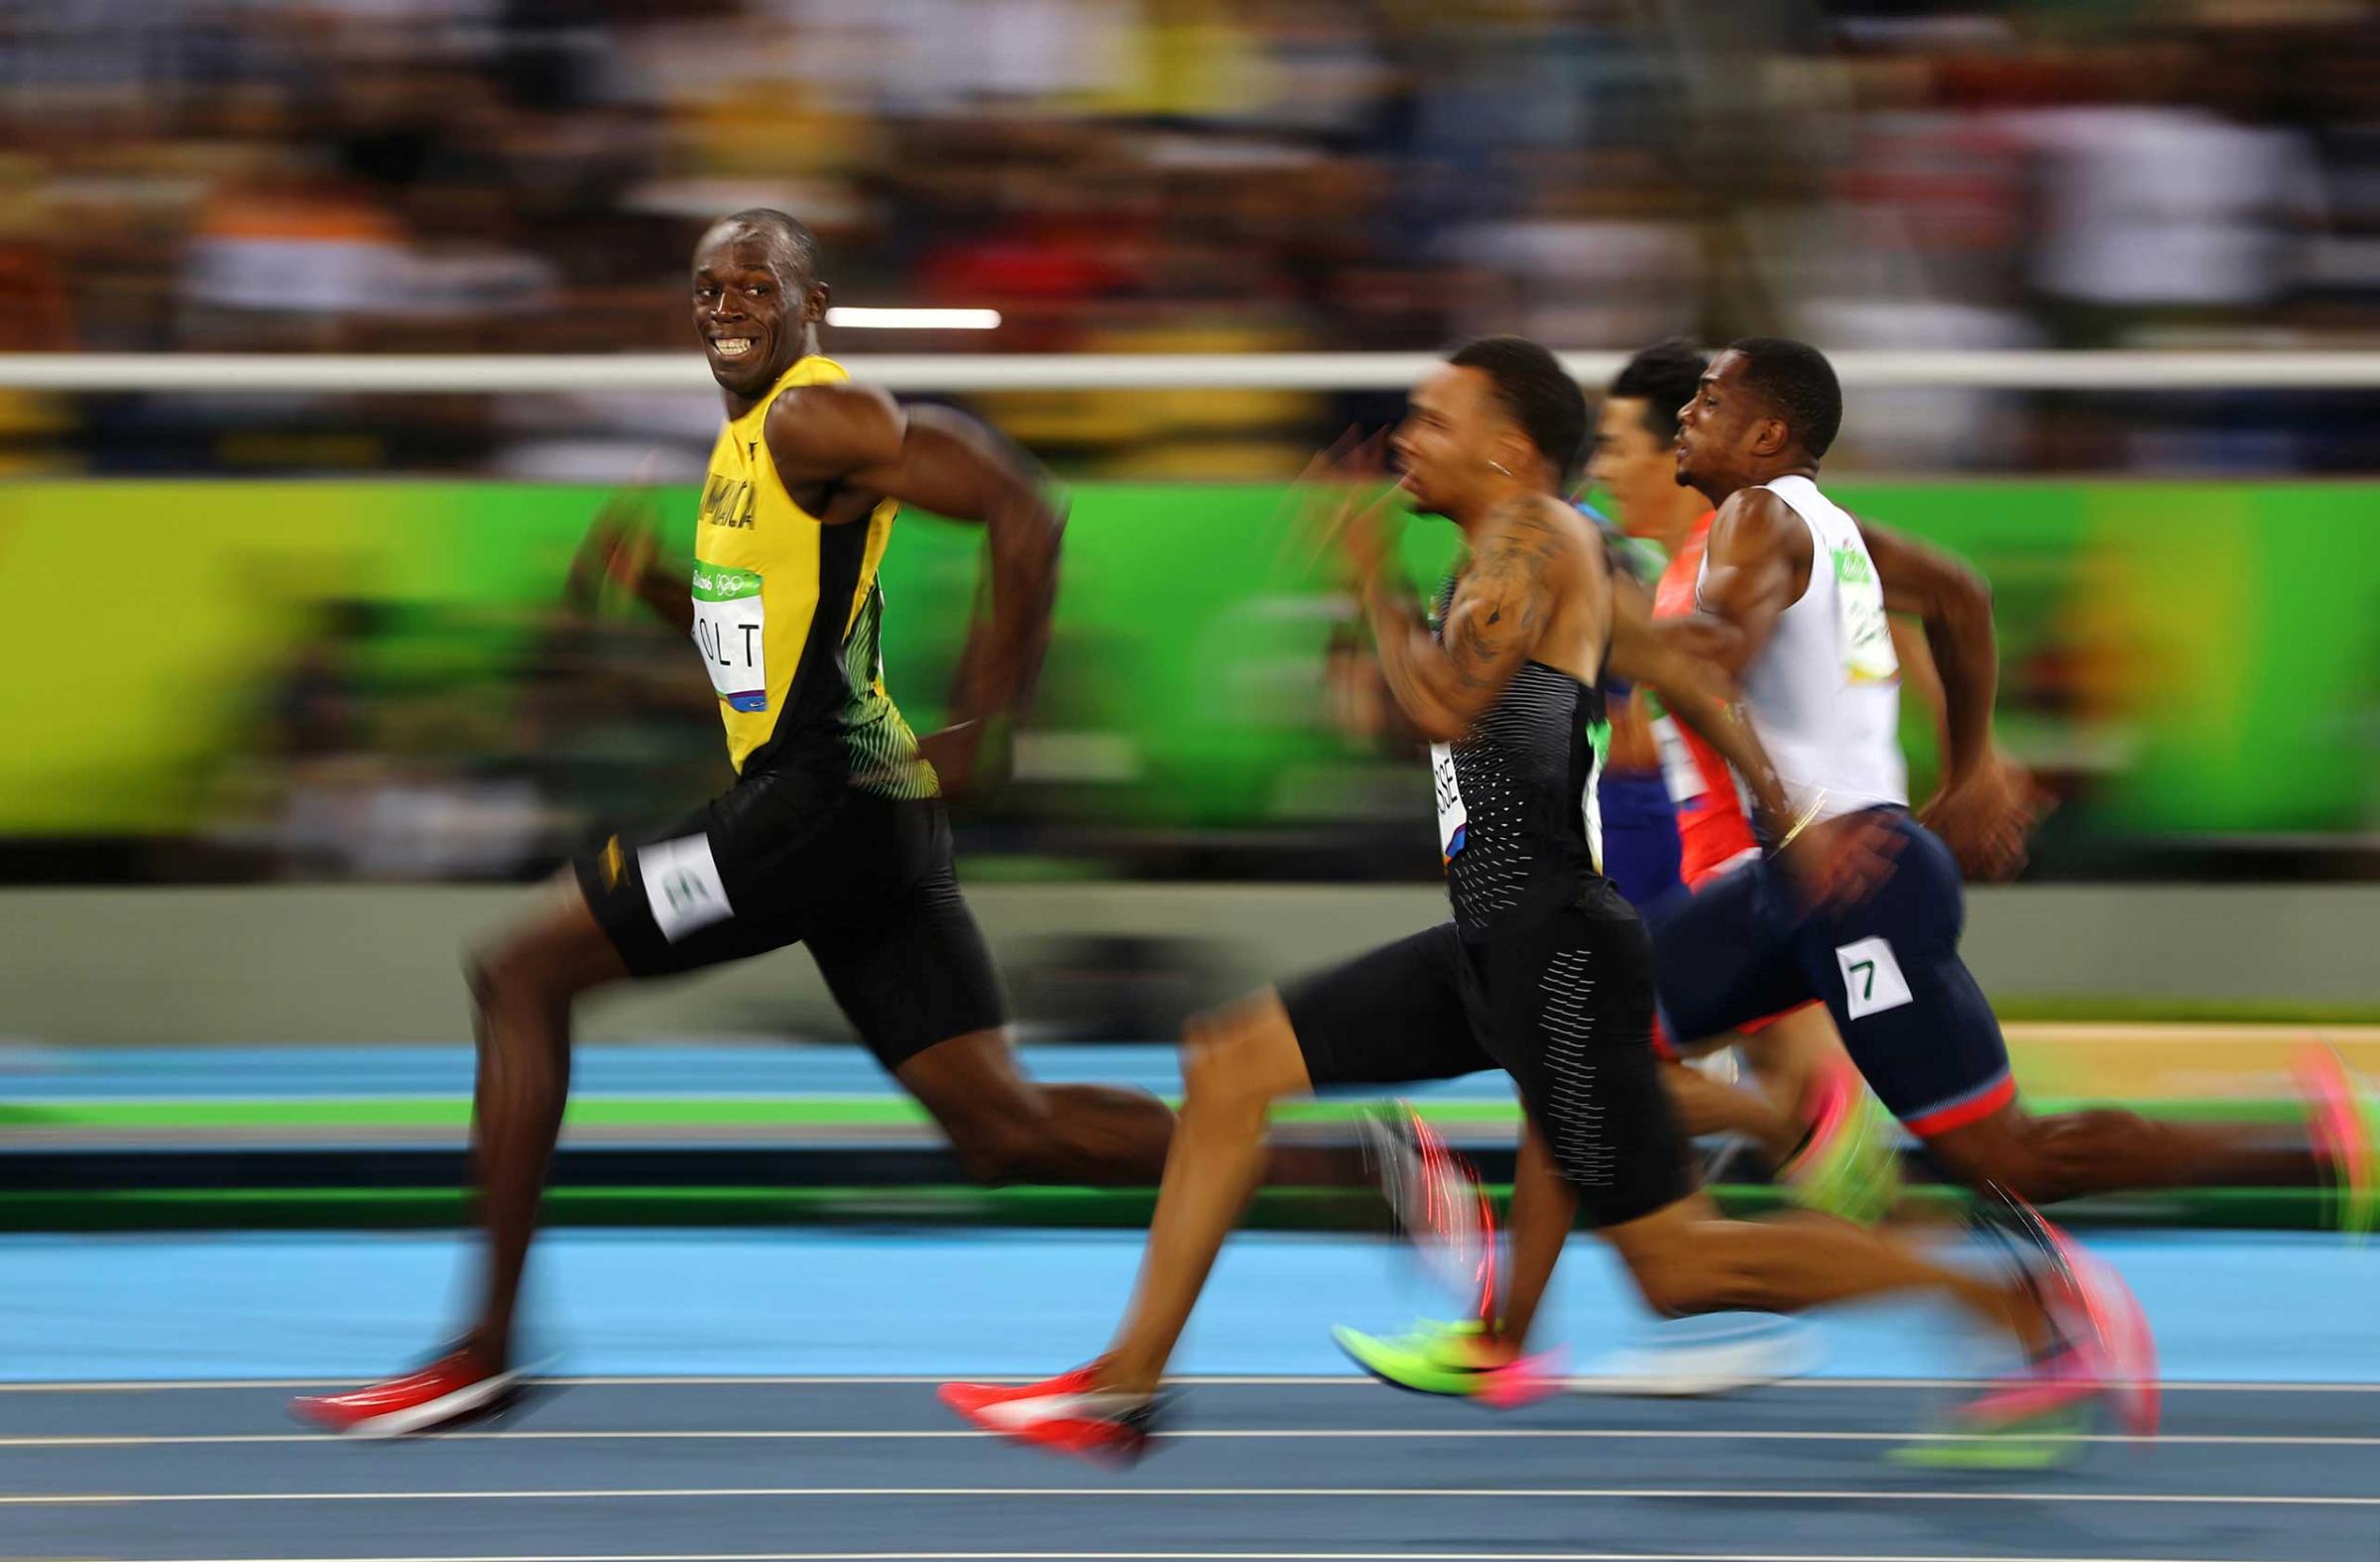 Jamaika's Usain Bolt smiles as he looks back while winning his 100m semi-final race at the Rio 2016 Olympics on August 14, 2006 in Rio de Janeiro.  REUTERS/ Kai Pfaffenbach